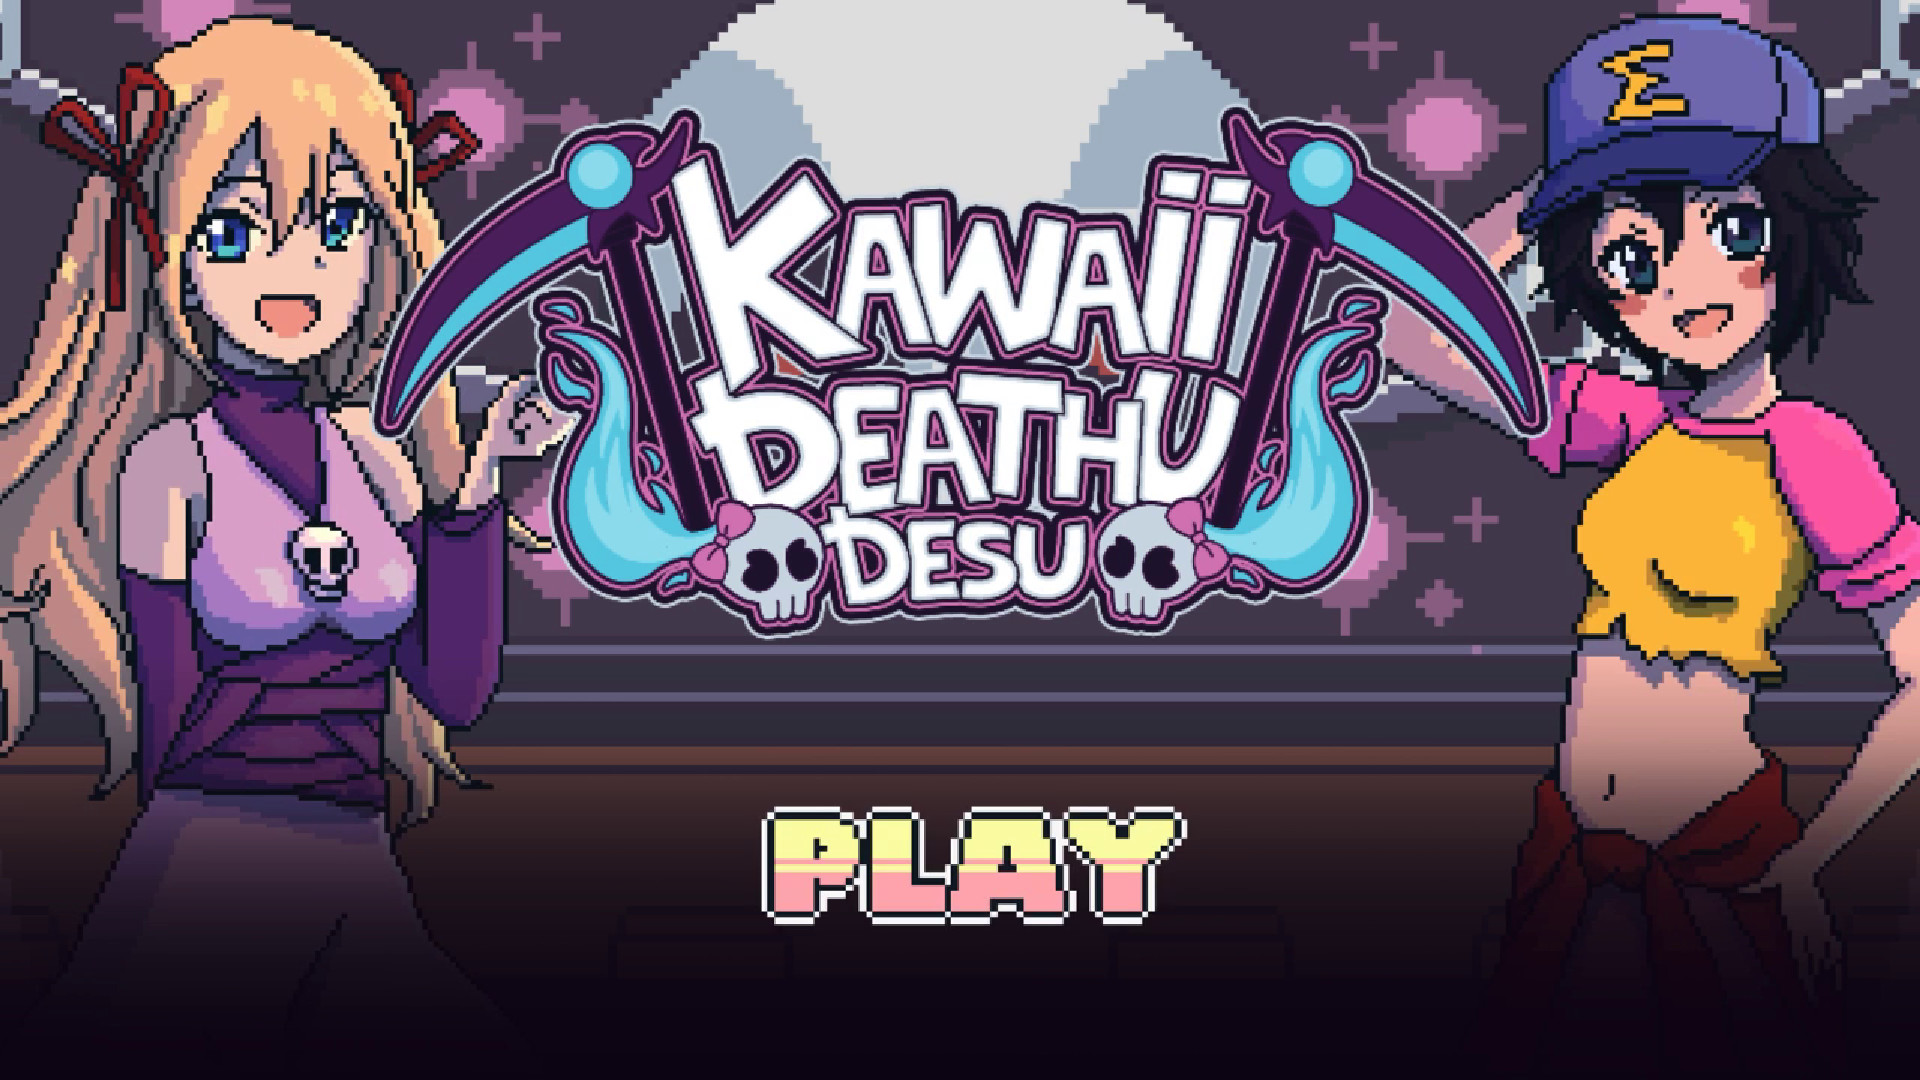 Kawaii death desu for mac os